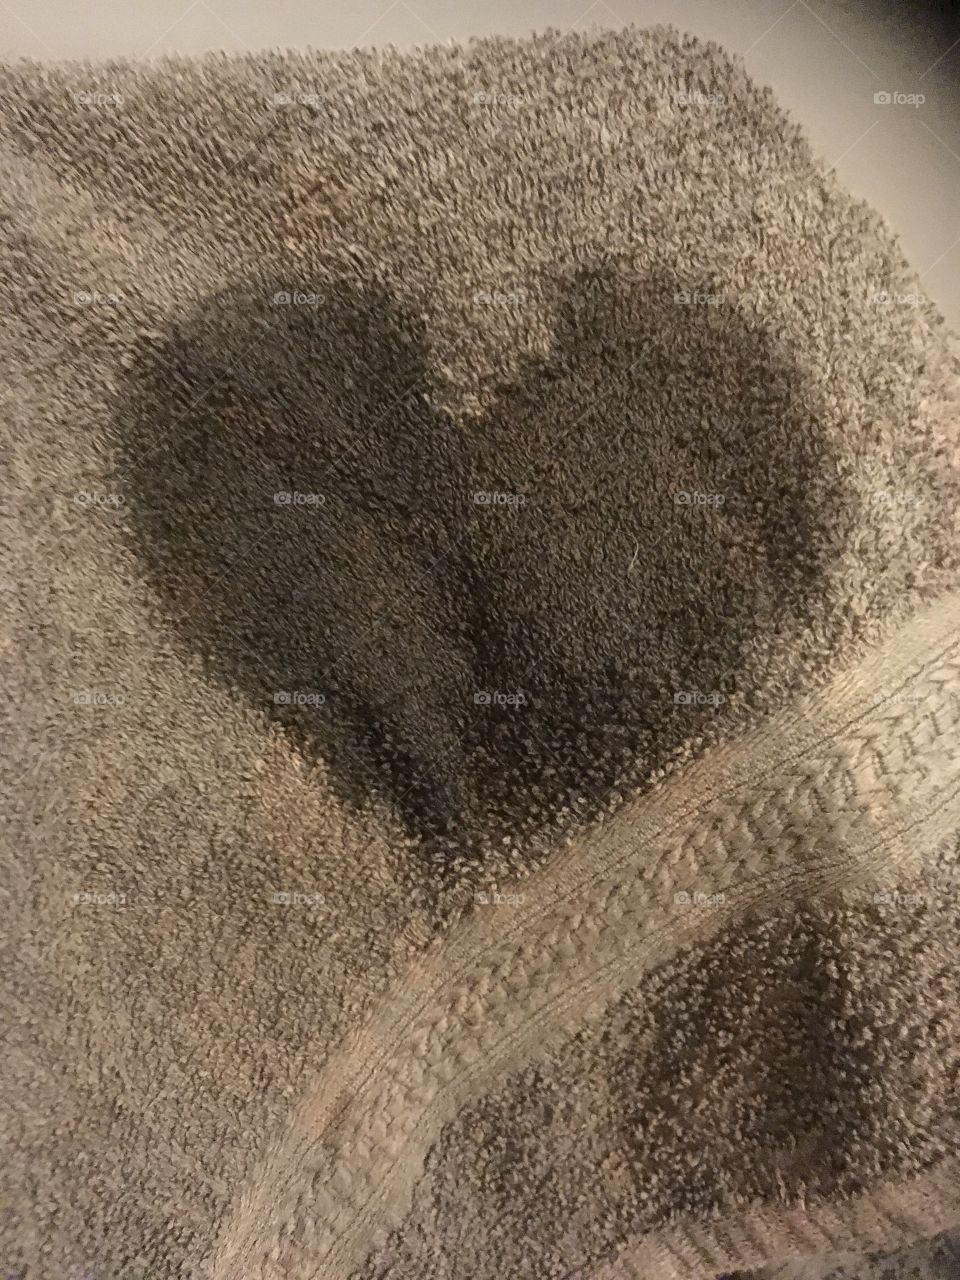 Towel heart